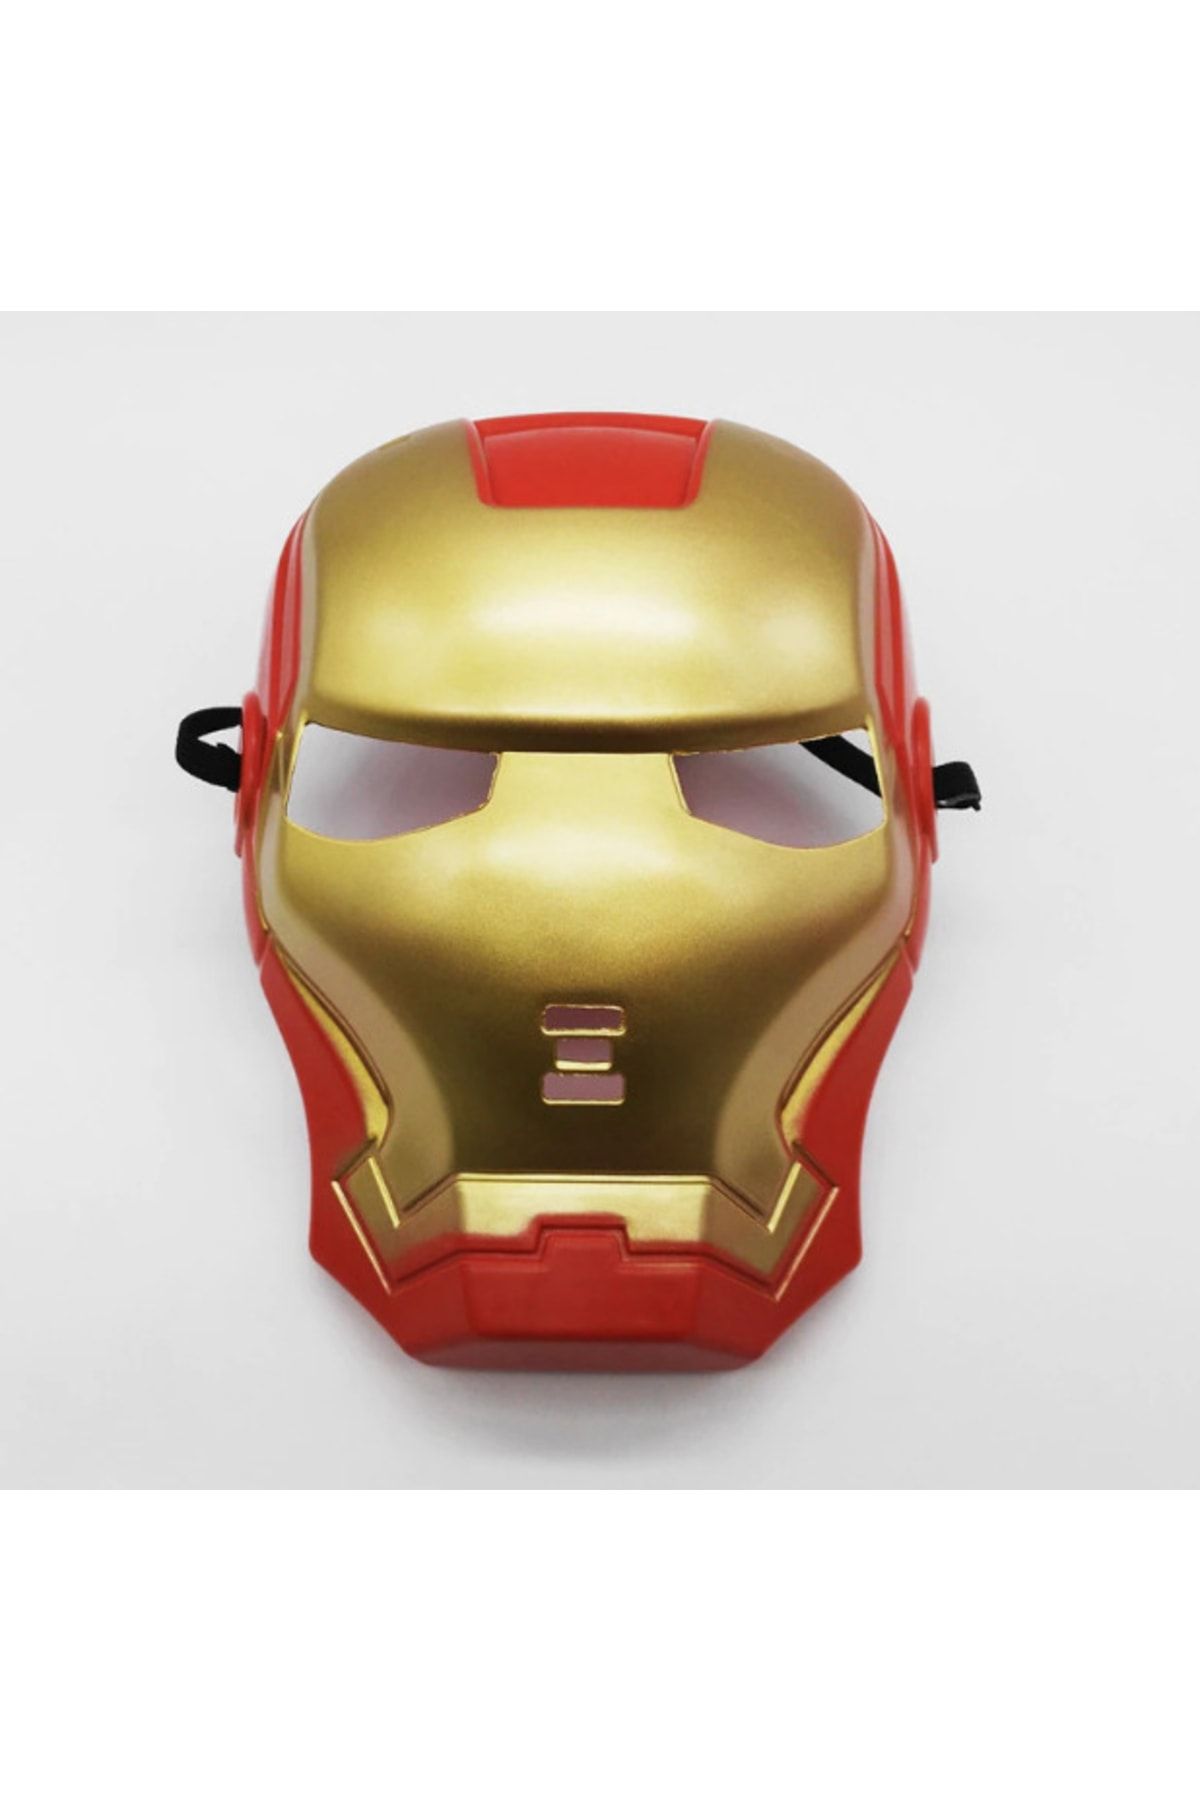 TEKNO İSTANBUL Iron Man Maskesi - Demir Adam Maskesi 21x15 Cm